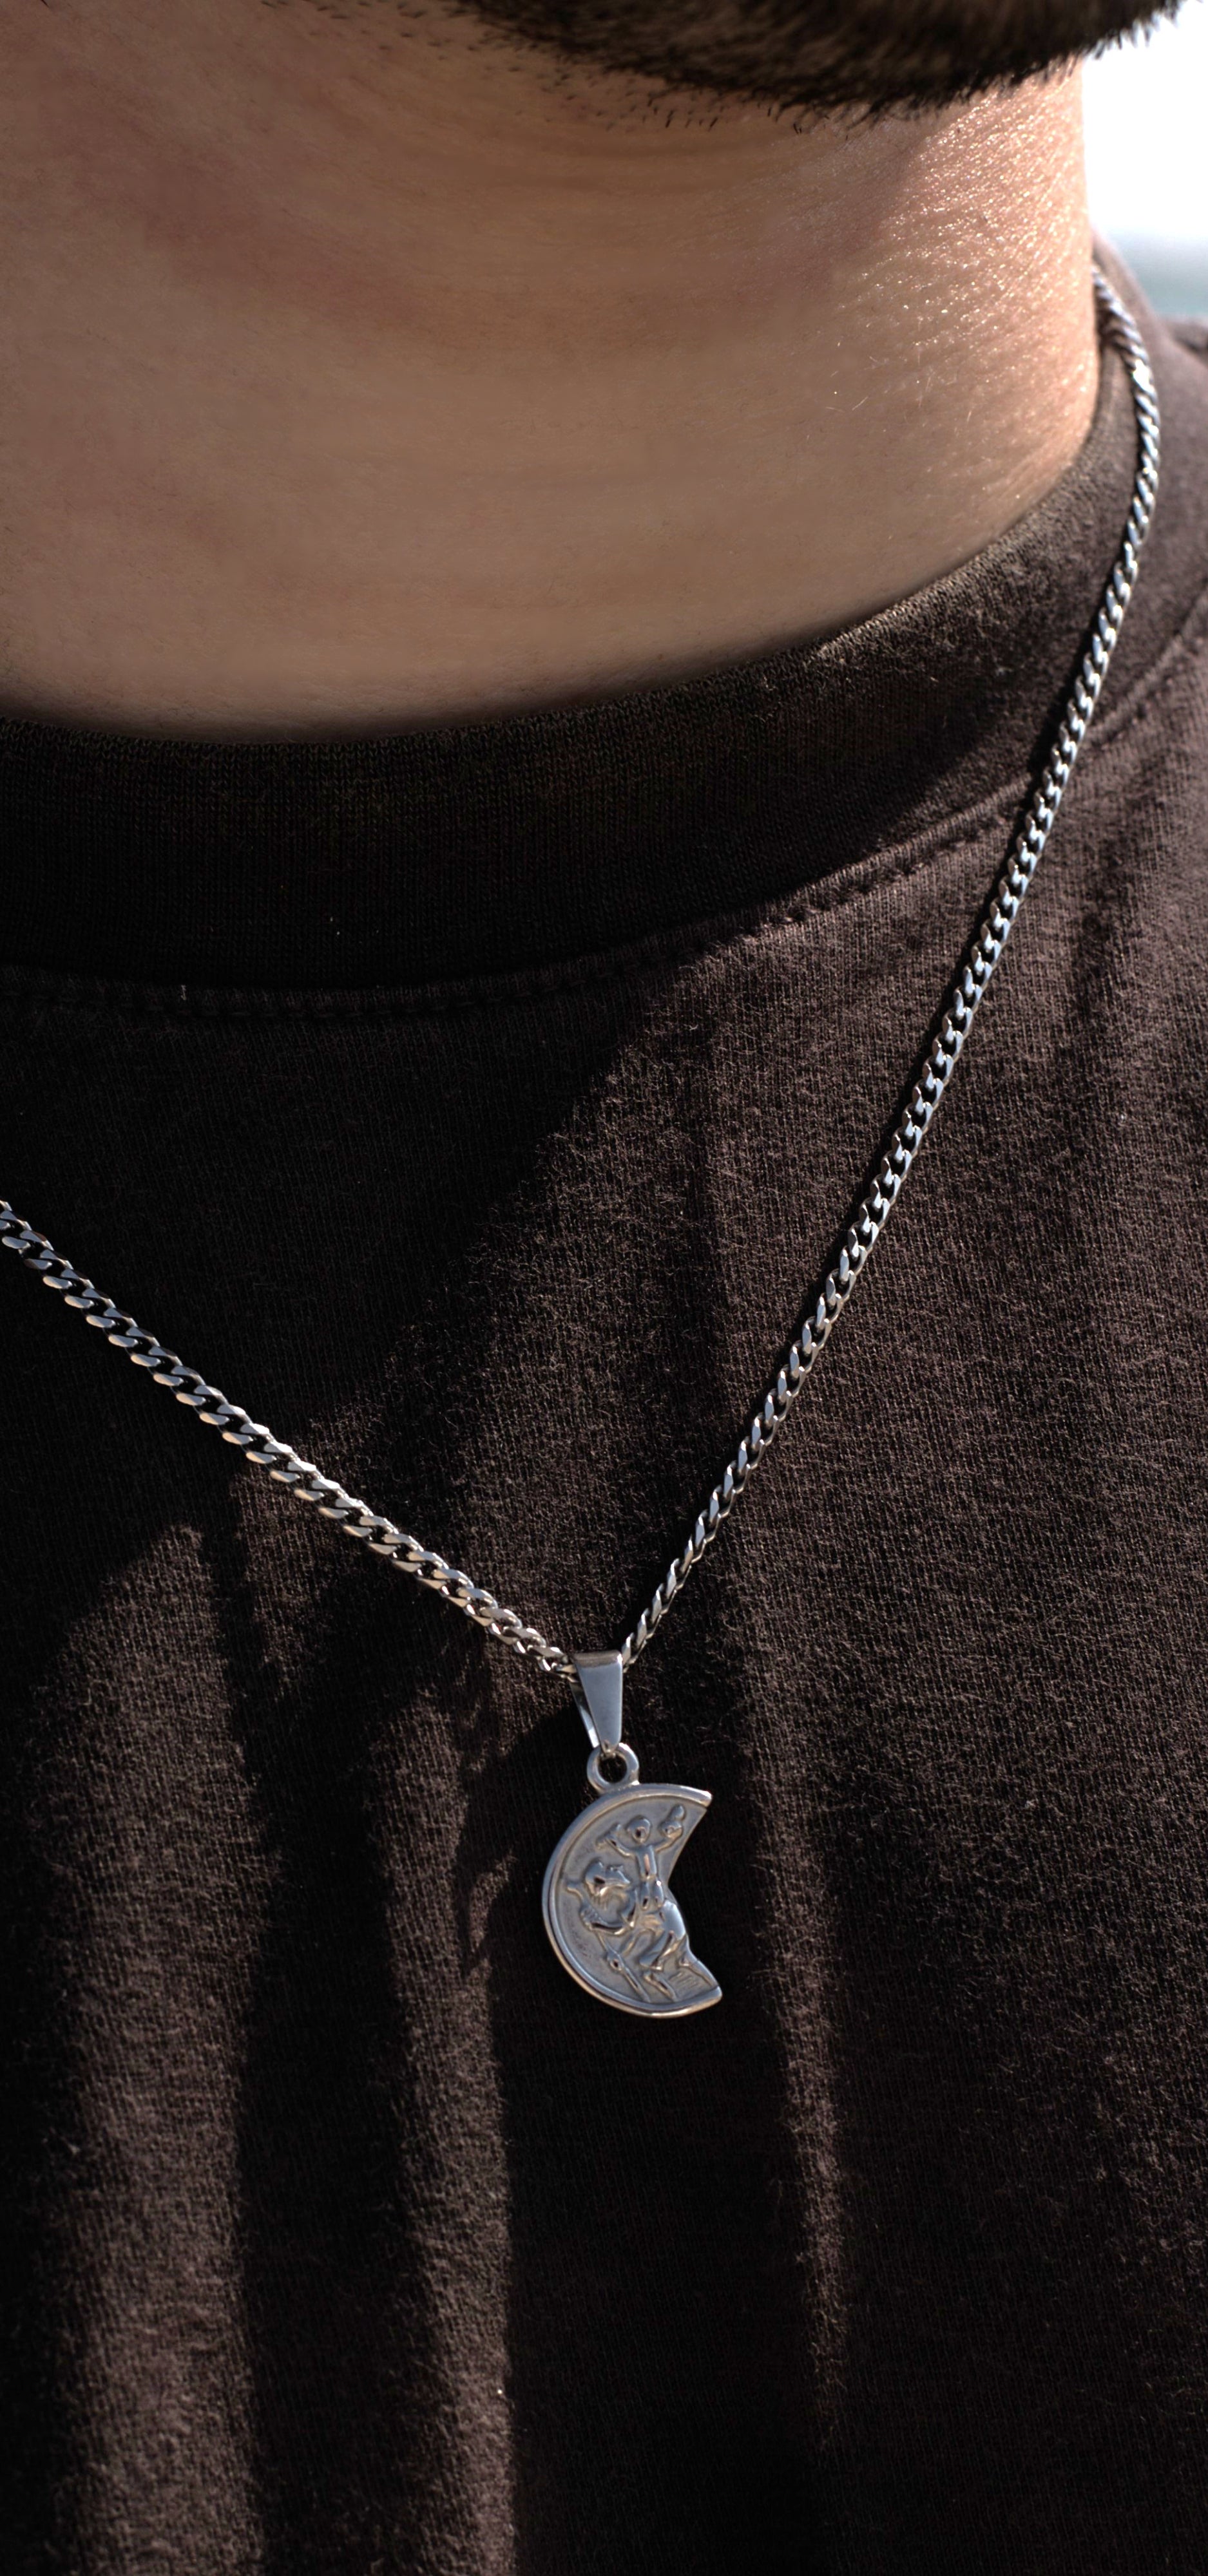 Engraved saint christopher jewellery pendant necklace men's jewellery Apollo Untold